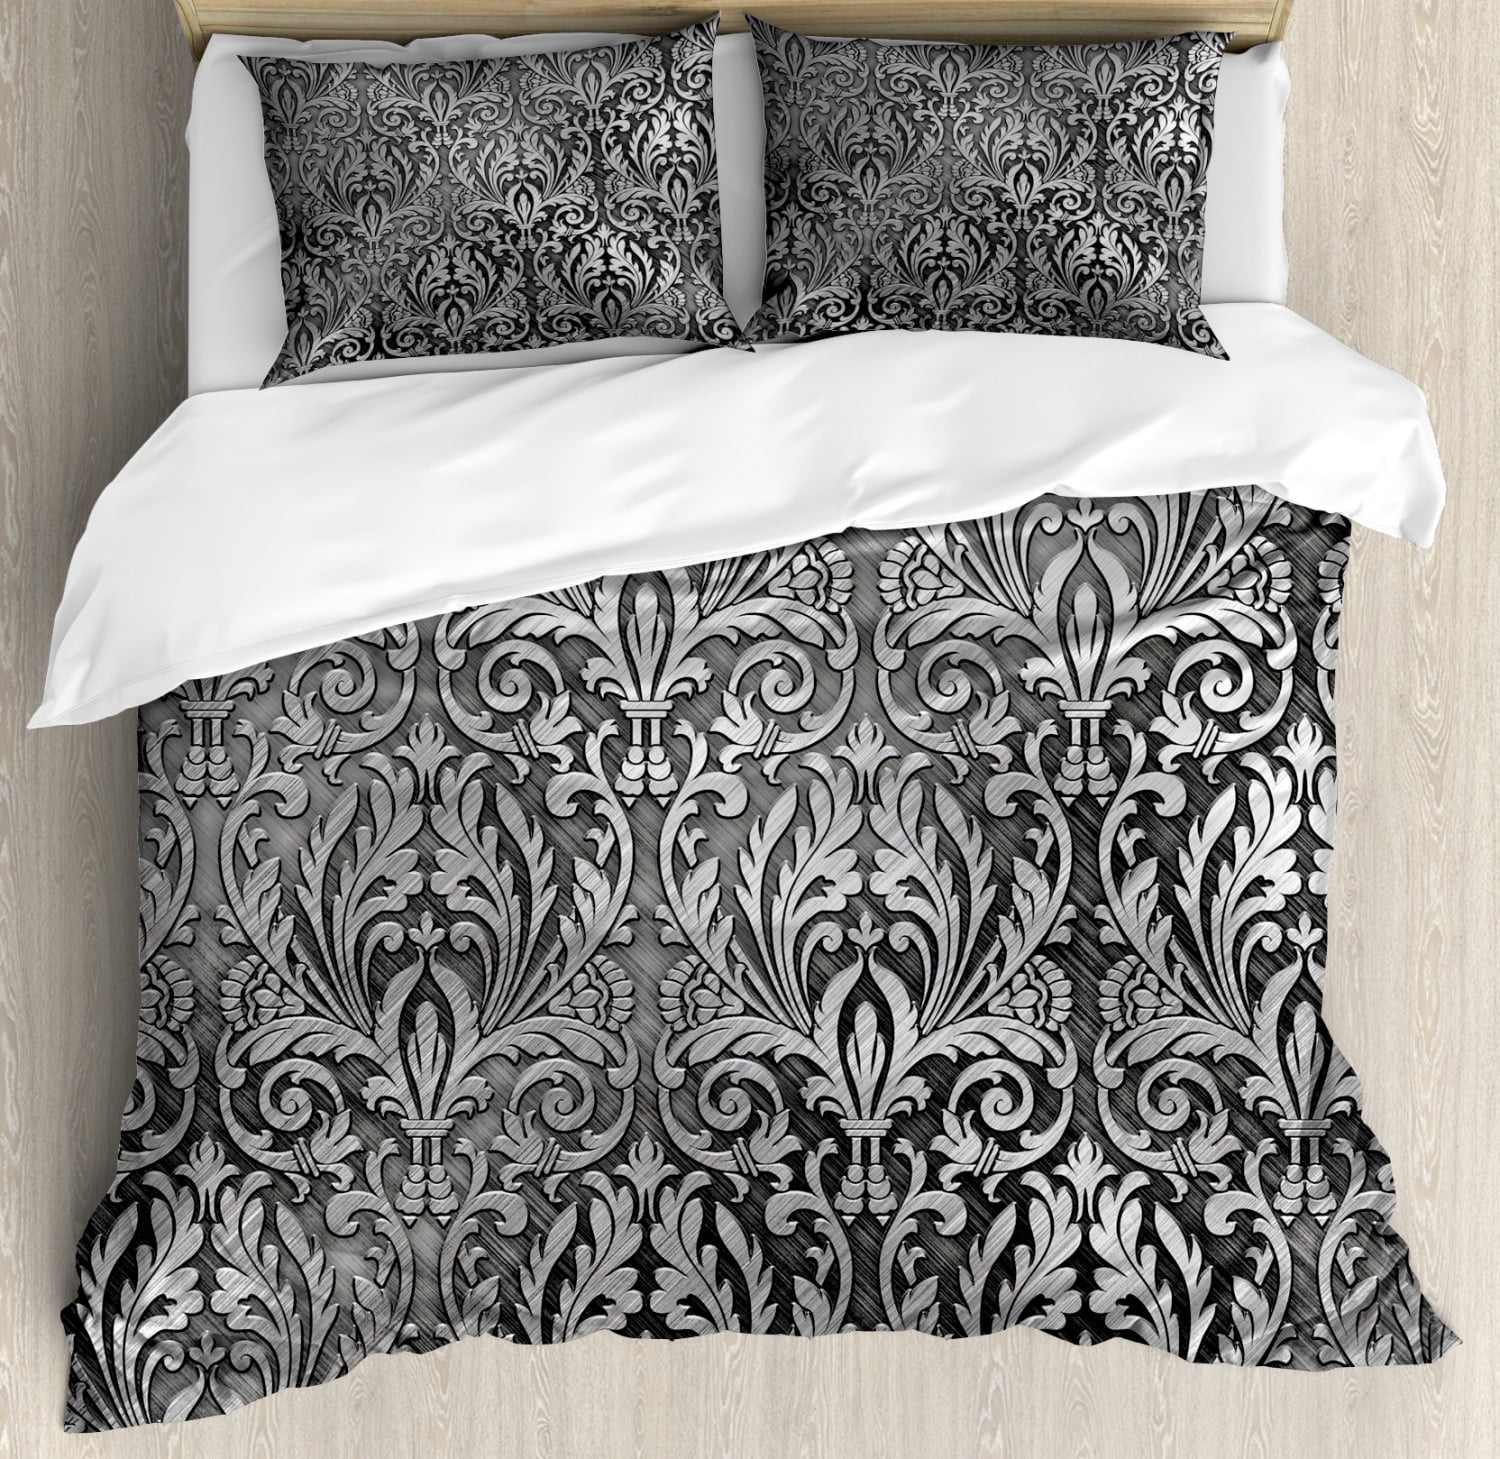 Duvet set empire stripe & damask print grey black quilt cover & pillow cases